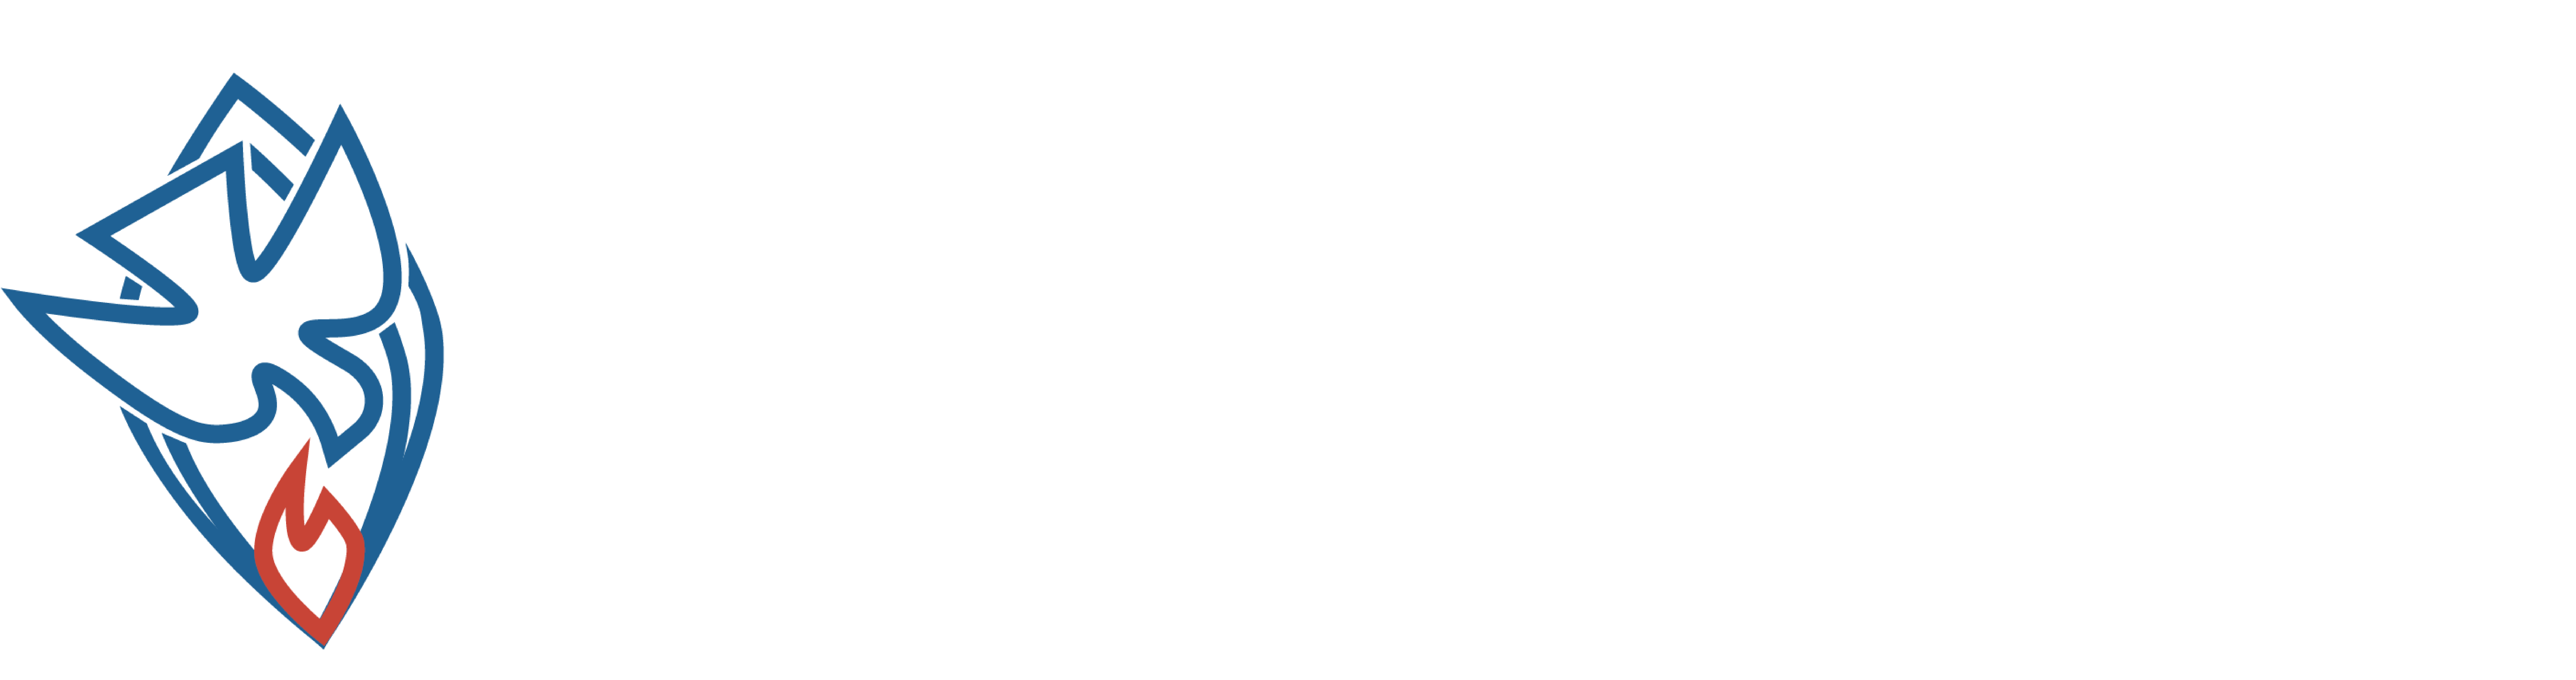 confirmation retreat logo